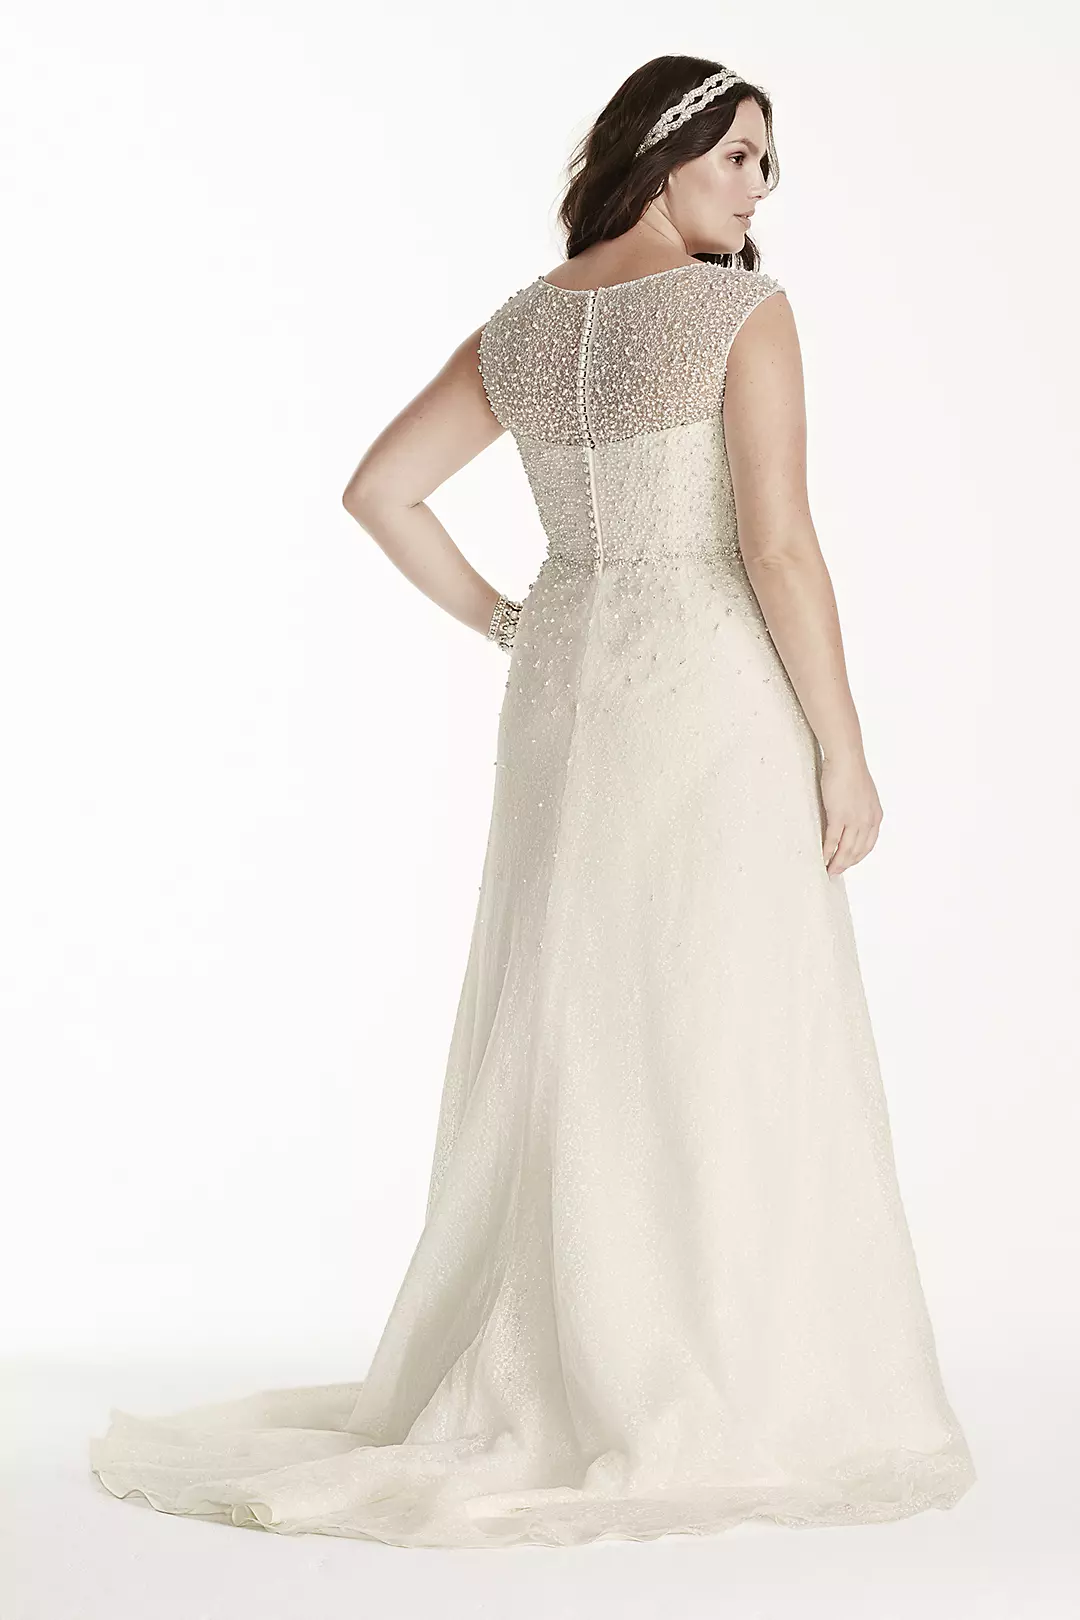 Jewel Cap Sleeve Wedding Dress with Pearl Details | David's Bridal